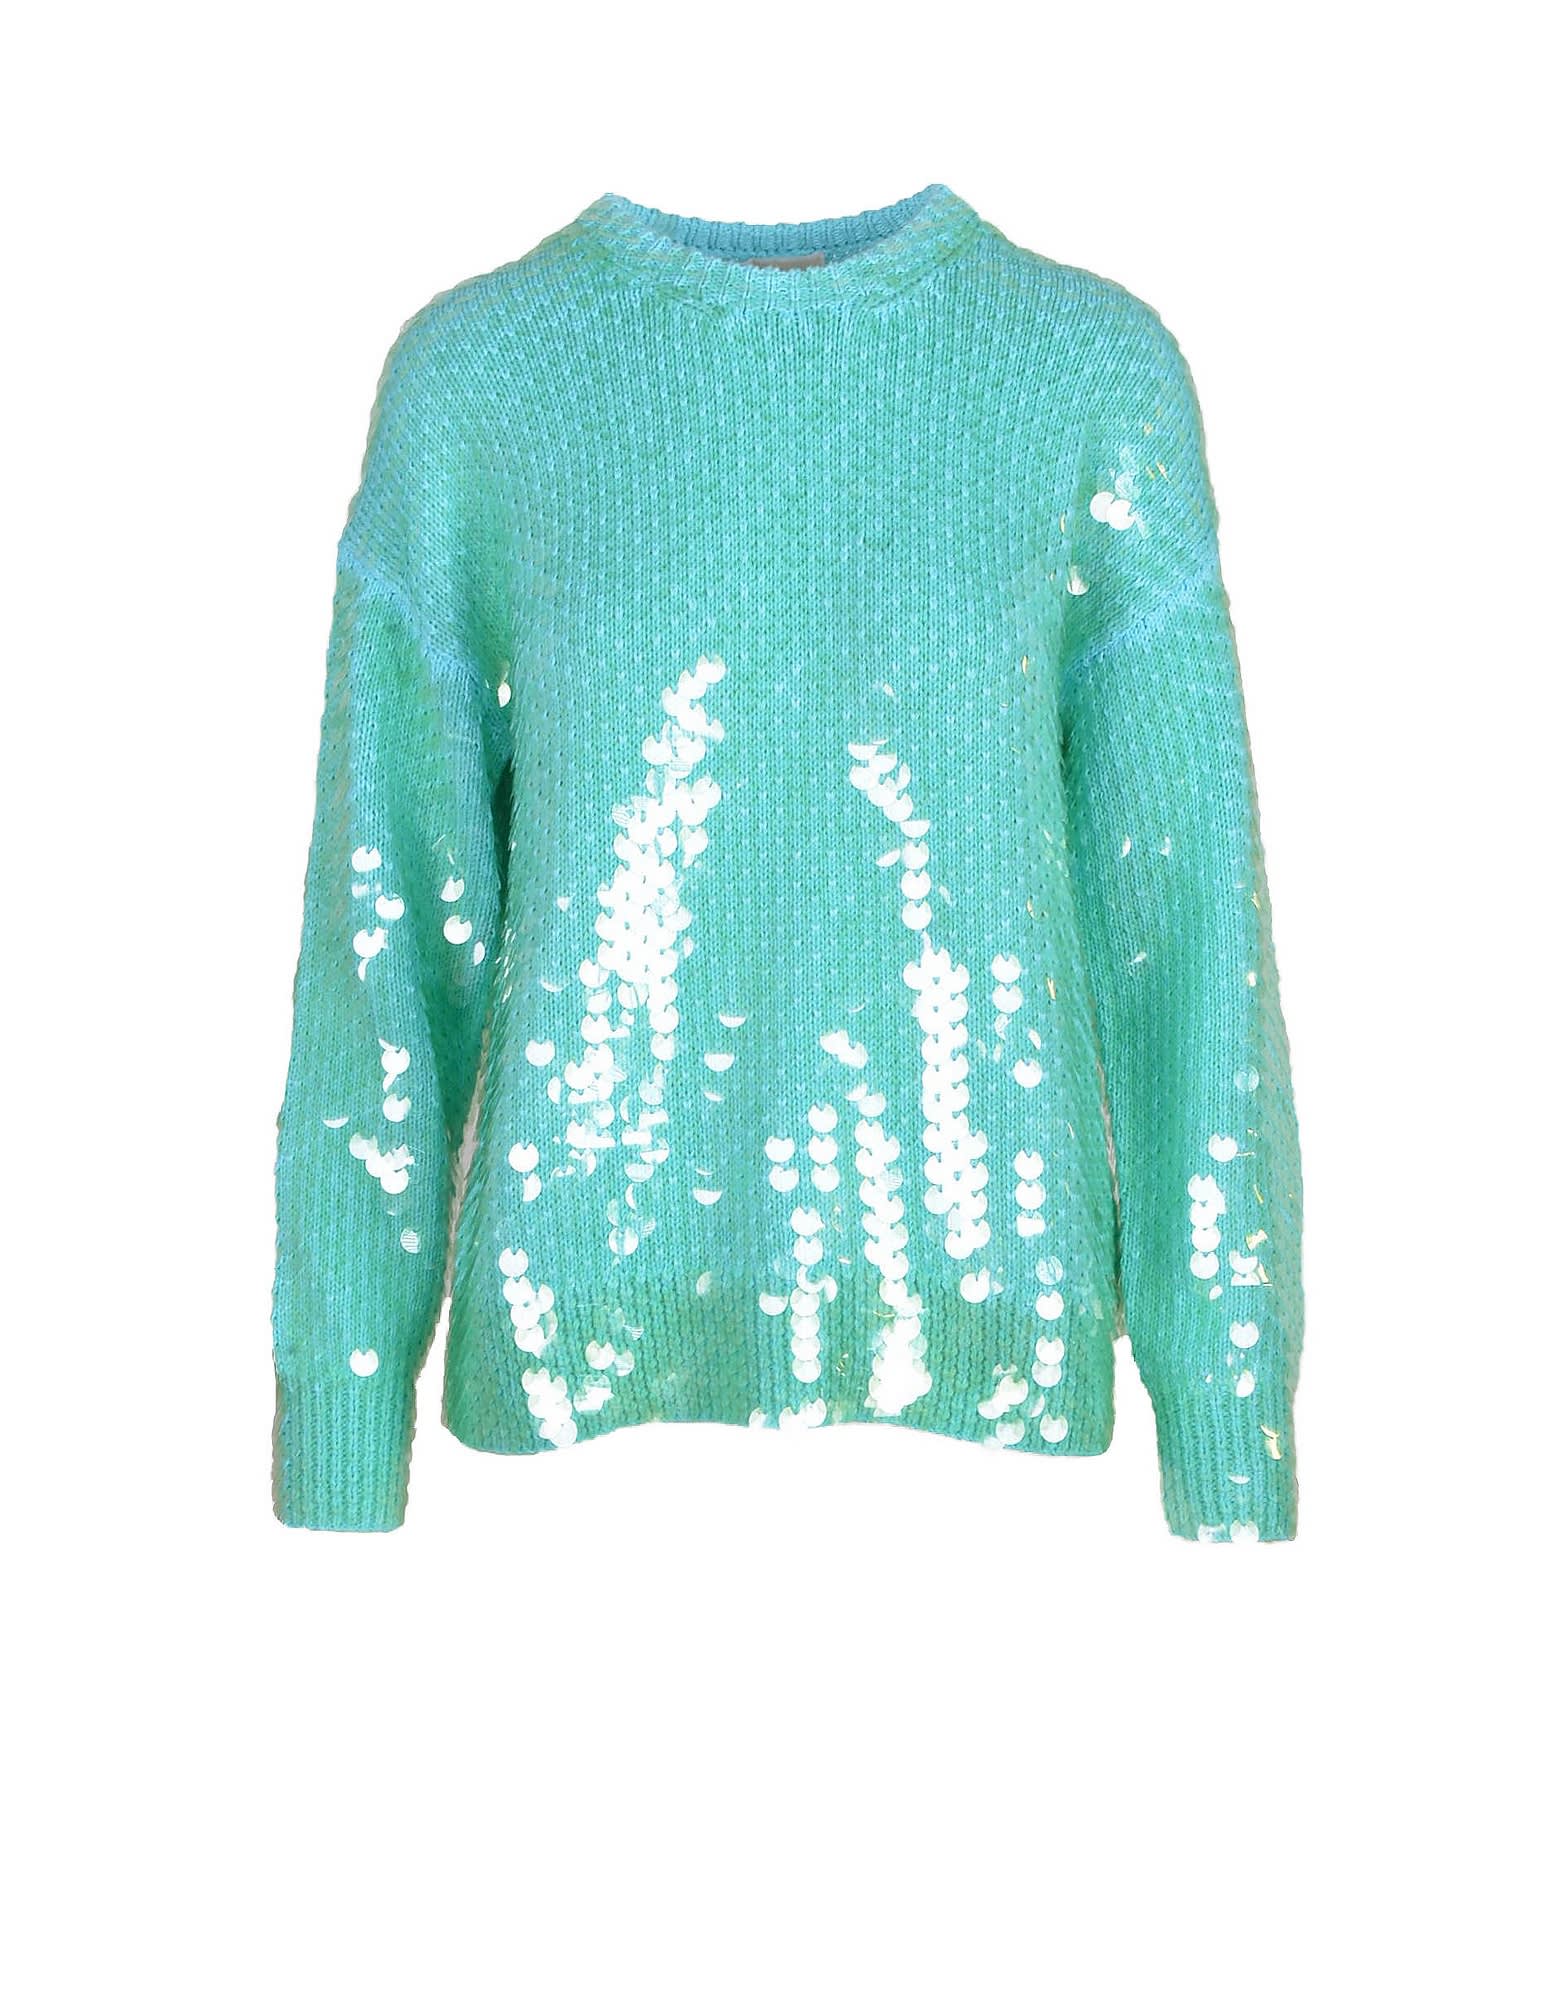 Michael Kors Womens Green Sweater